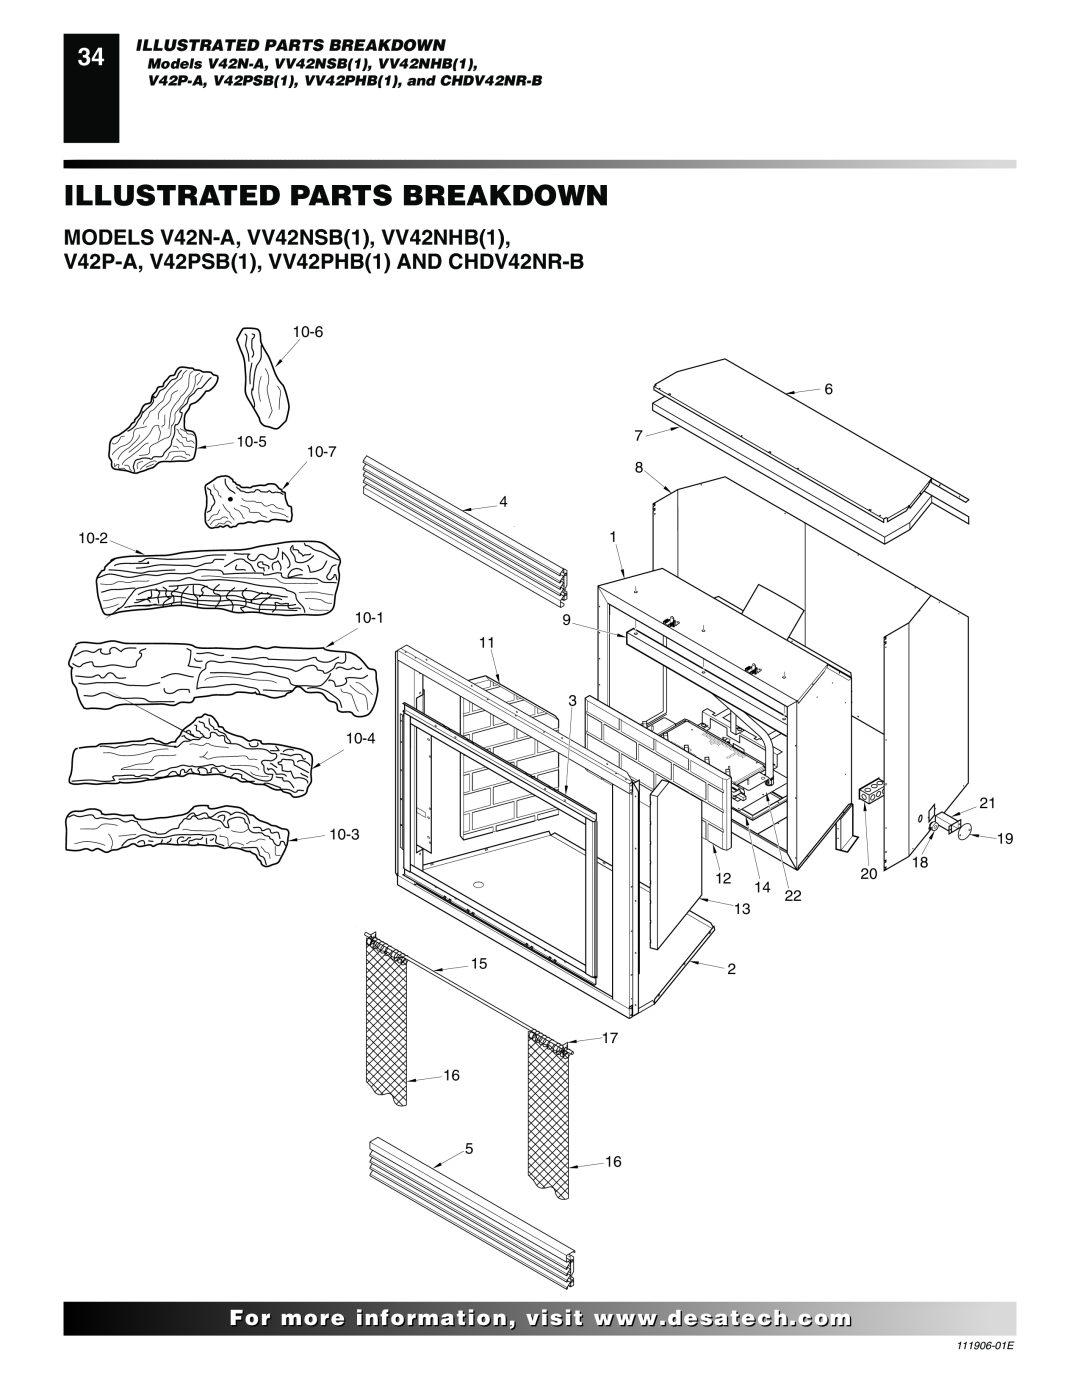 Desa VV42PB(1) Illustrated Parts Breakdown, MODELS V42N-A, VV42NSB1, VV42NHB1, V42P-A, V42PSB1, VV42PHB1 AND CHDV42NR-B 